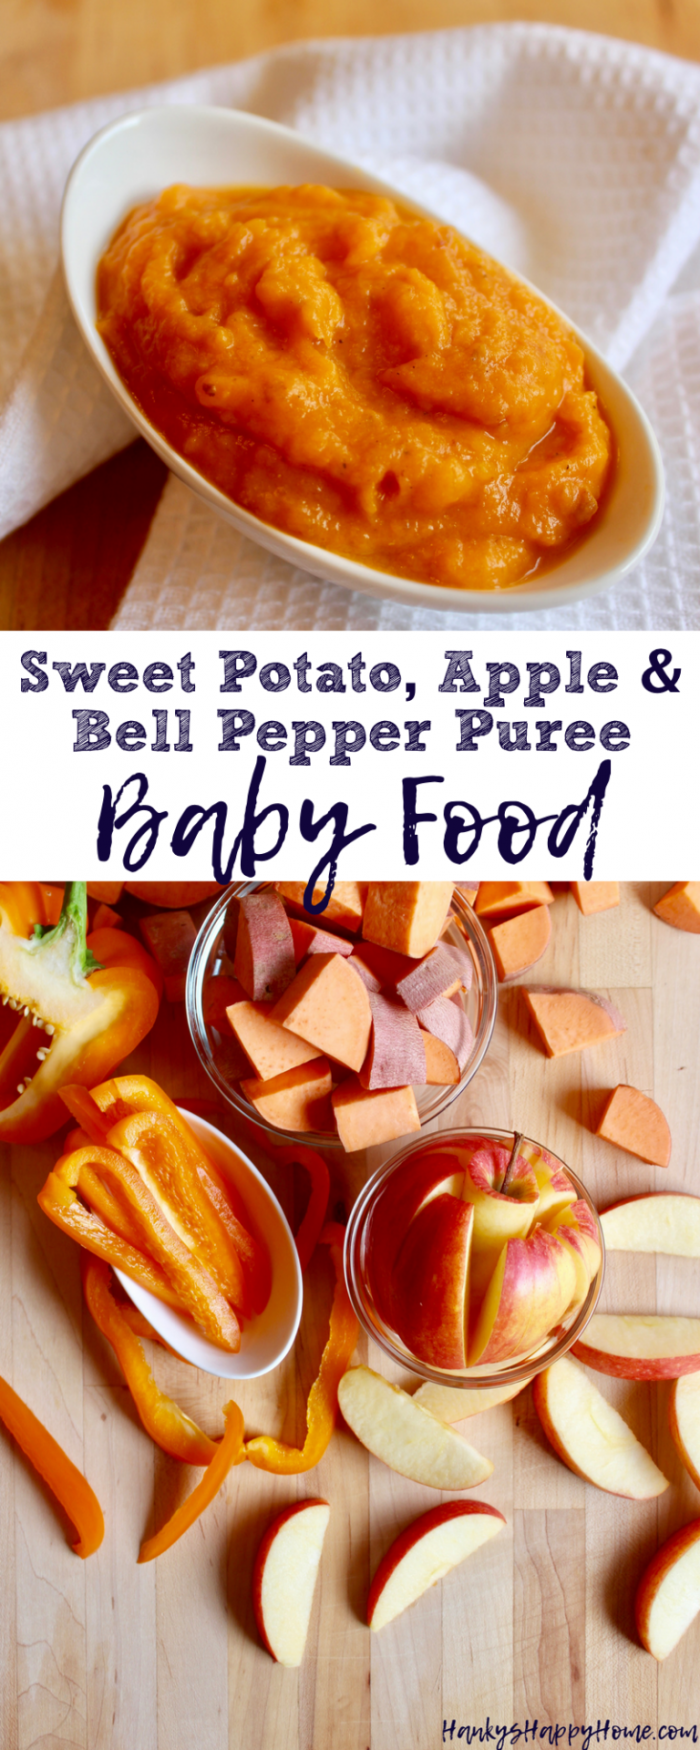 Baby Food: Sweet Potato, Apple, Bell Pepper Puree